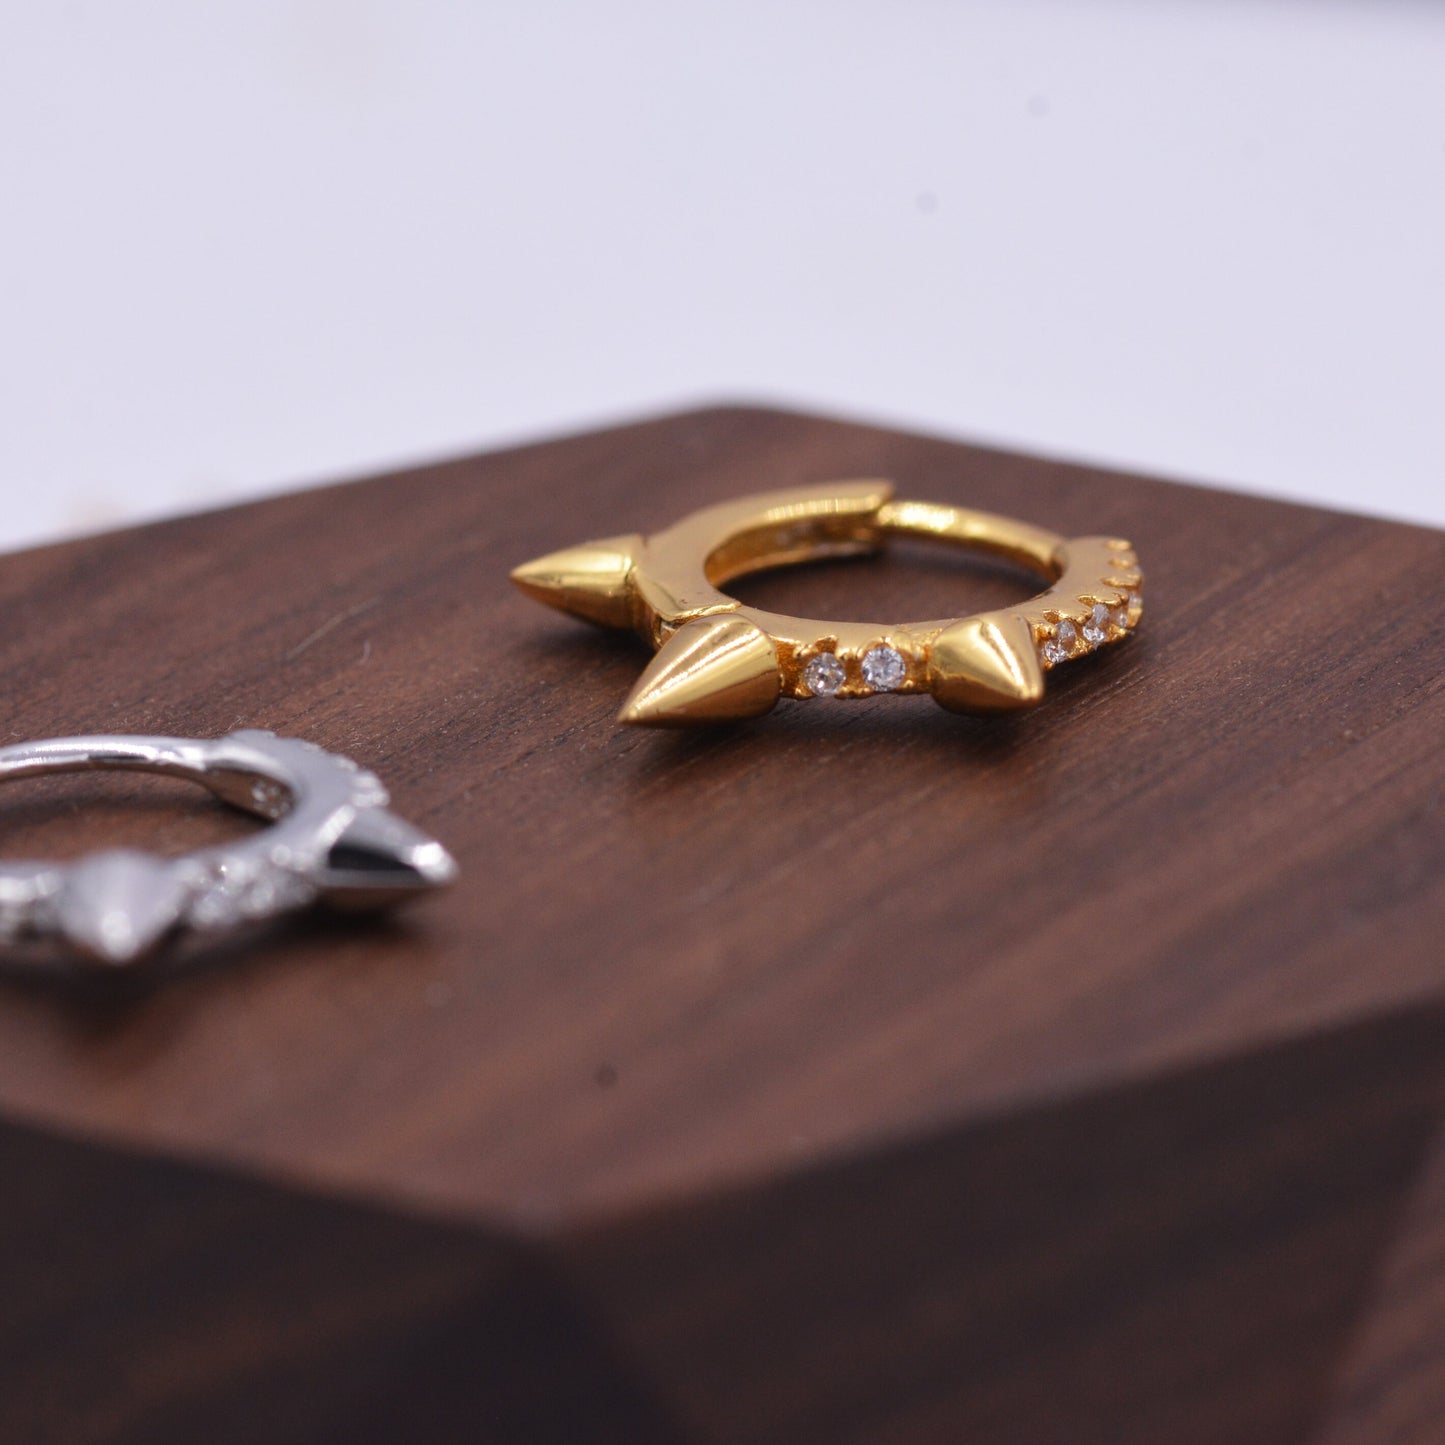 Triple Spike Huggie Hoop Earrings in Sterling Silver with CZ Crystal Pave, Gold or Silver,  Funky Geometric Design